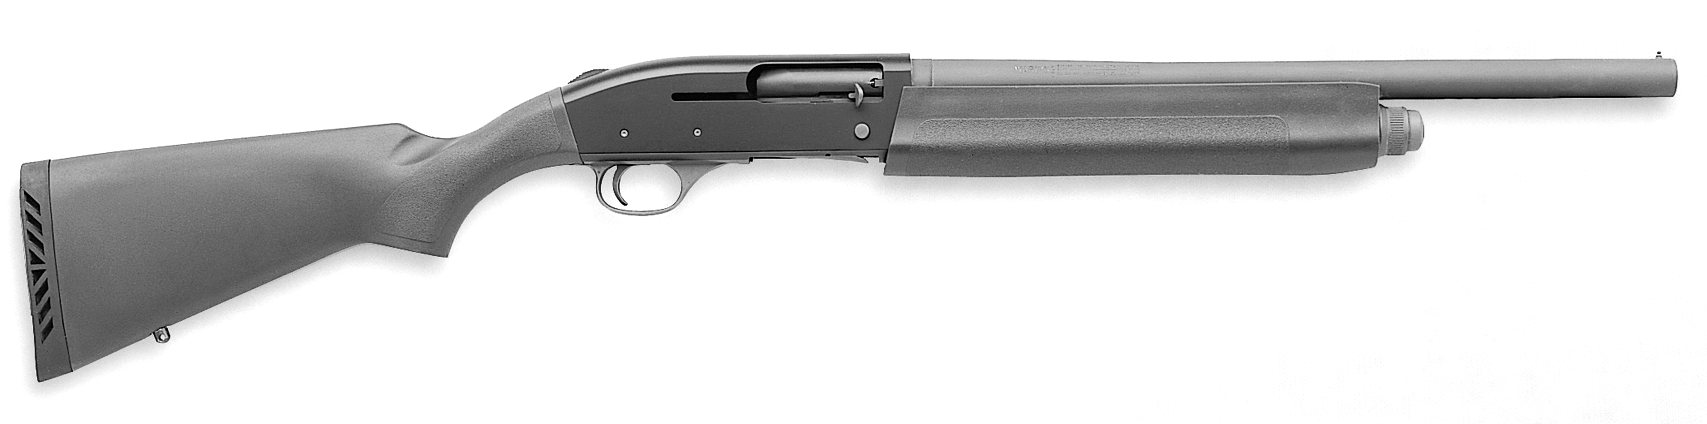 Model 9200 Jungle Gun